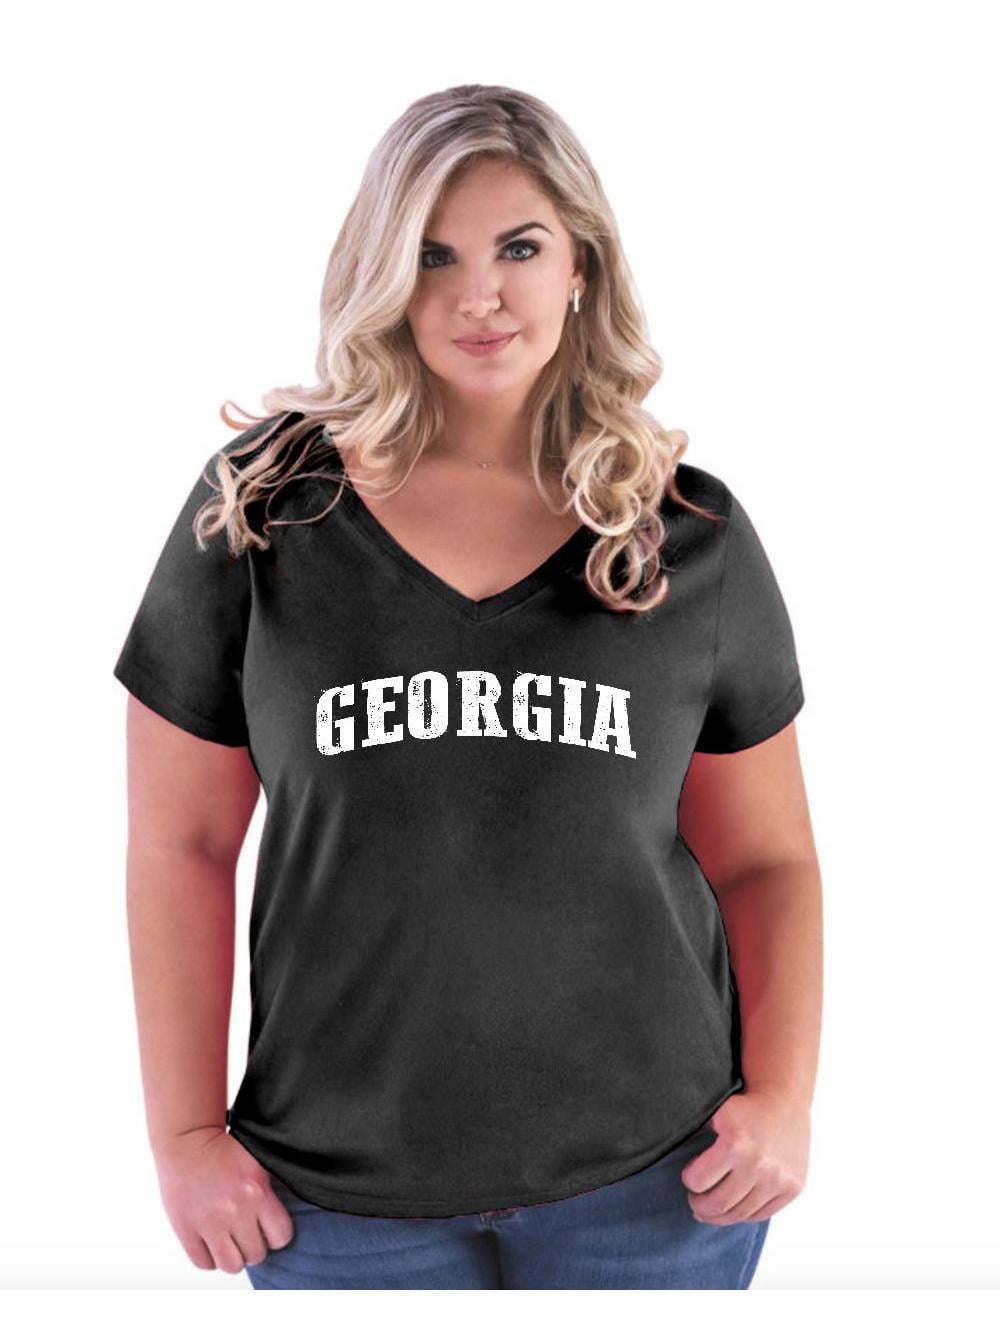 hoppe mørkere Det er billigt Women's Plus Size V-neck T-Shirt - Georgia - Walmart.com